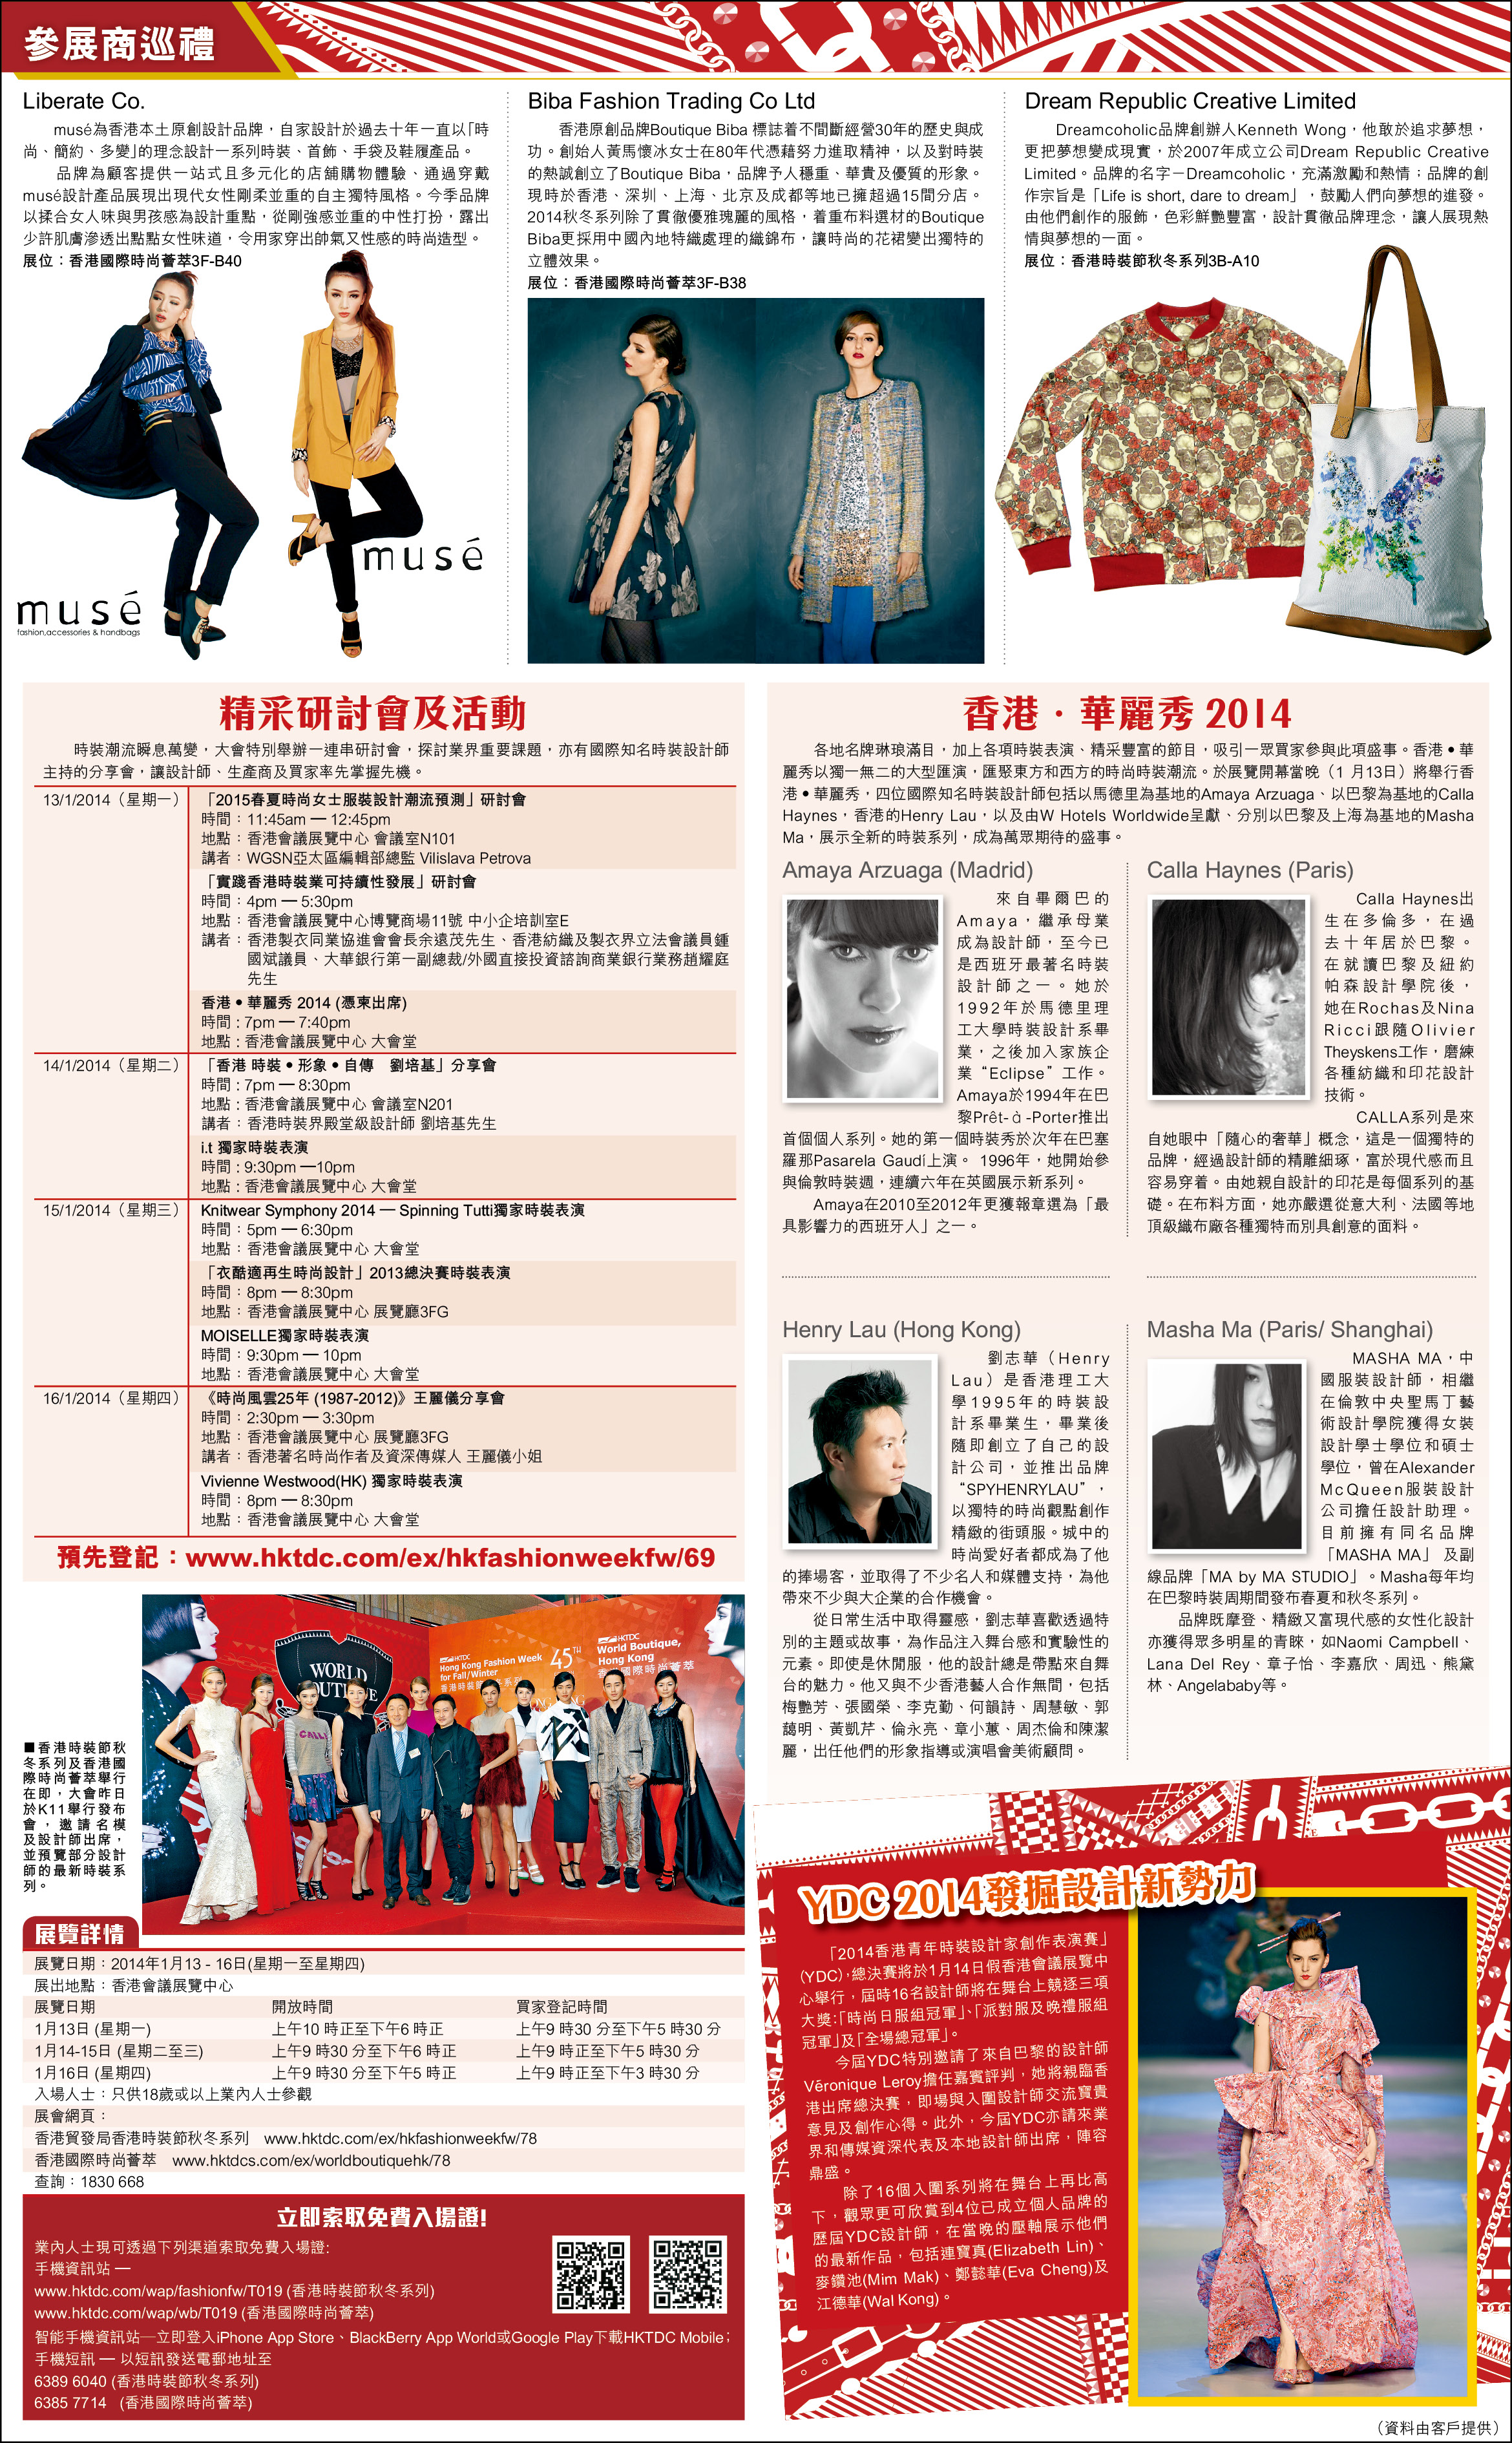 kenneth wong 設計師傳媒報導: 於HKTDC 時裝週接受星島日報採訪